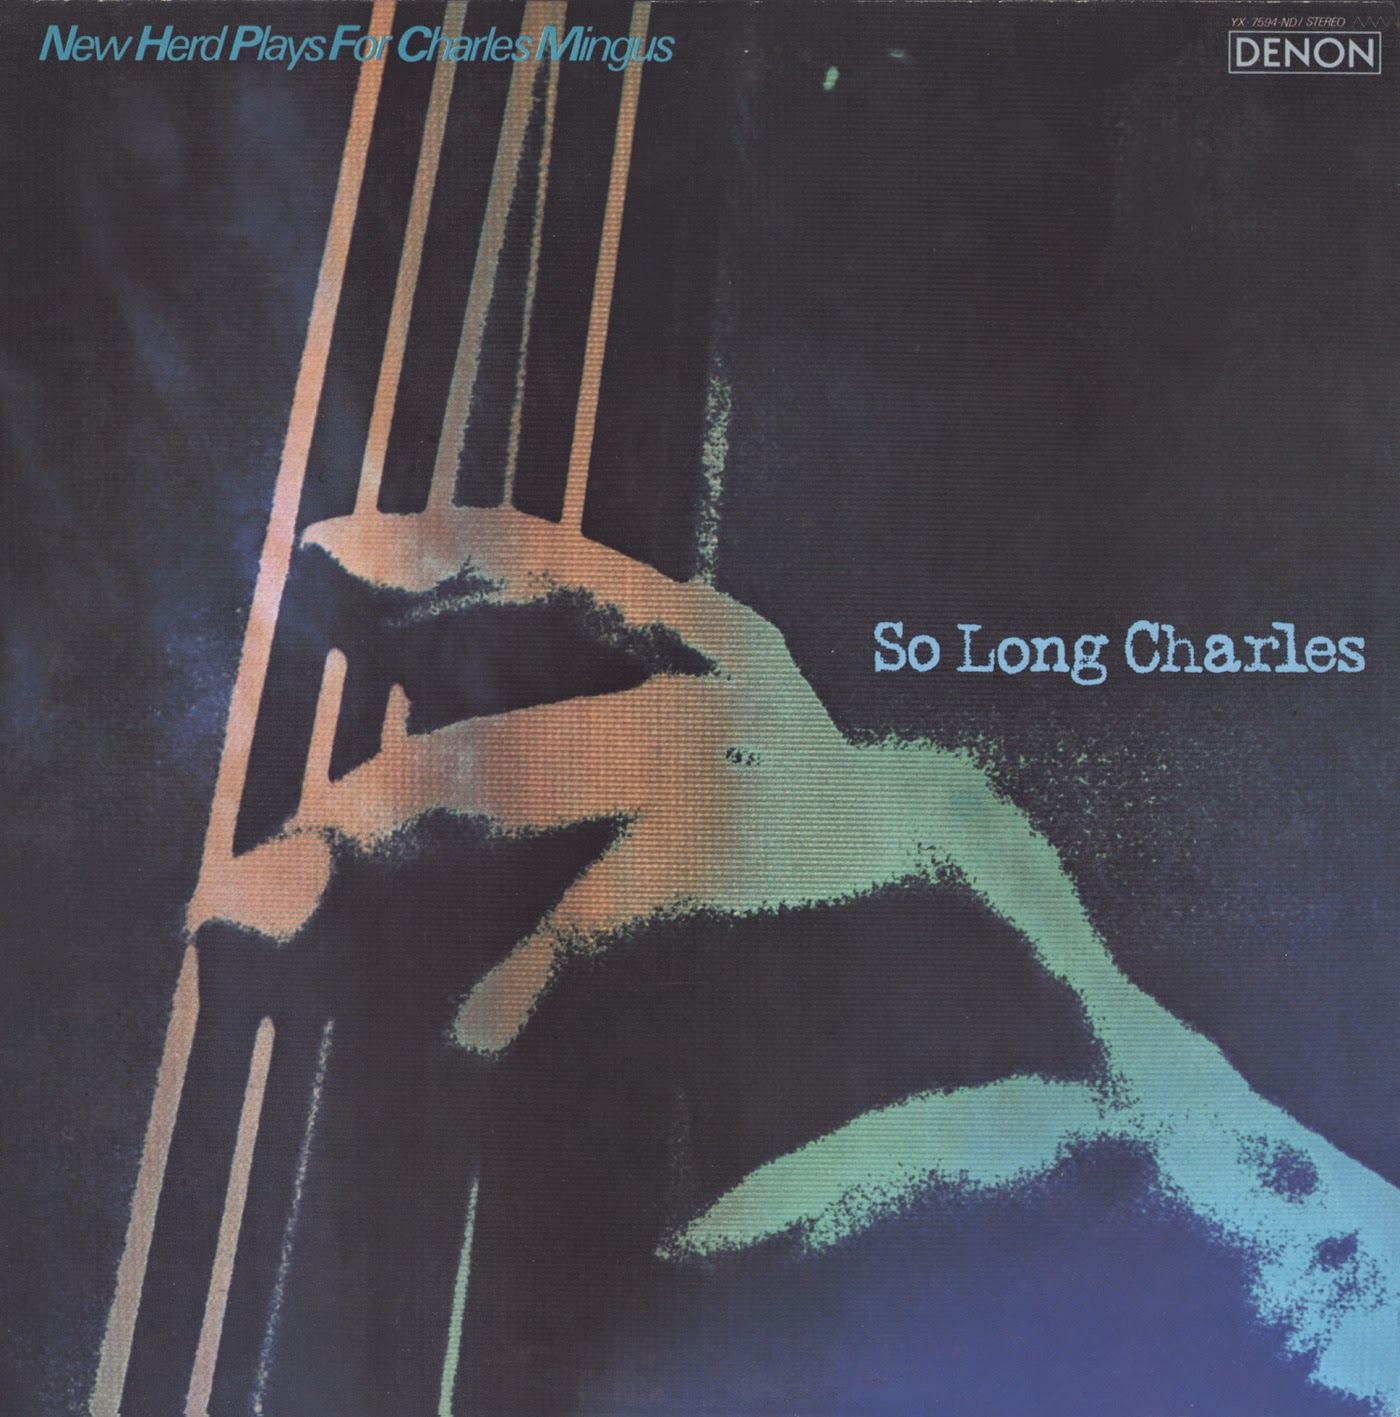 TOSHIYUKI MIYAMA - So Long Charles - New Herd Plays For Charles Mingus cover 